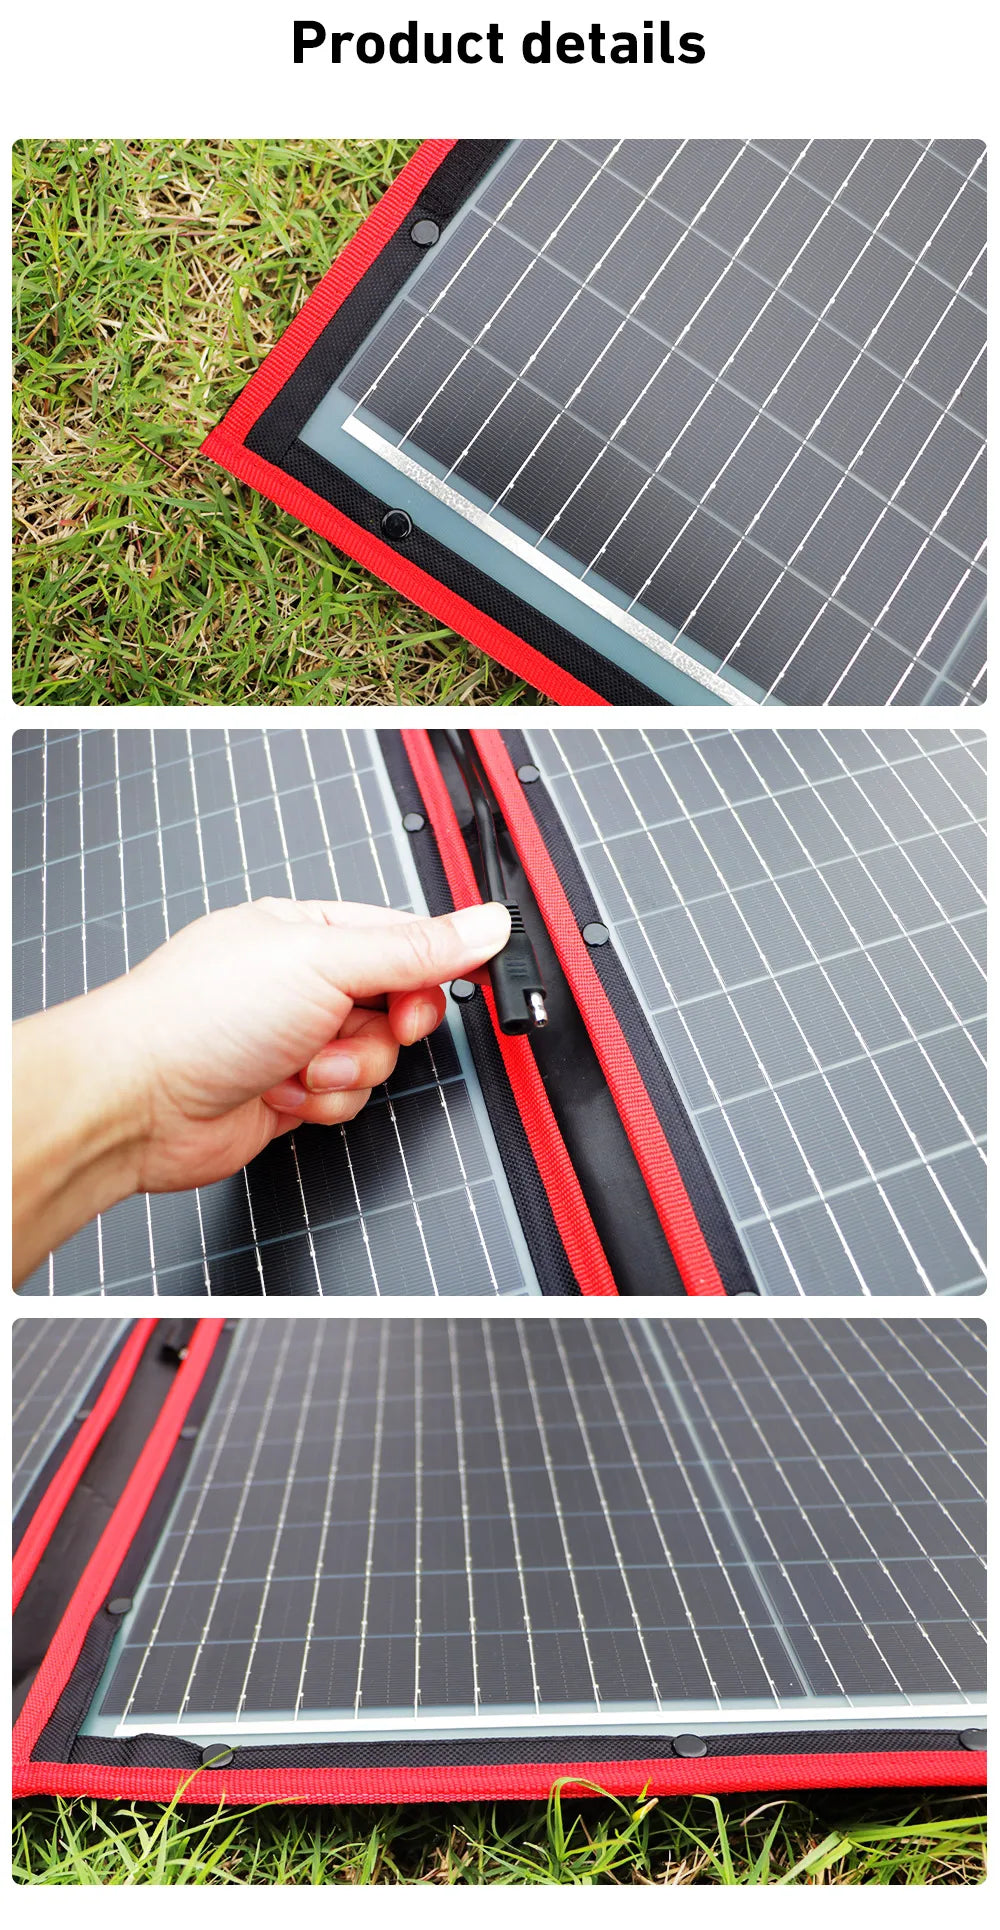 DOKIO 18V 100W 300W Portable Ffolding Solar Panel, DOKIO home appliance specifications, Mainland China origin, CE certified.